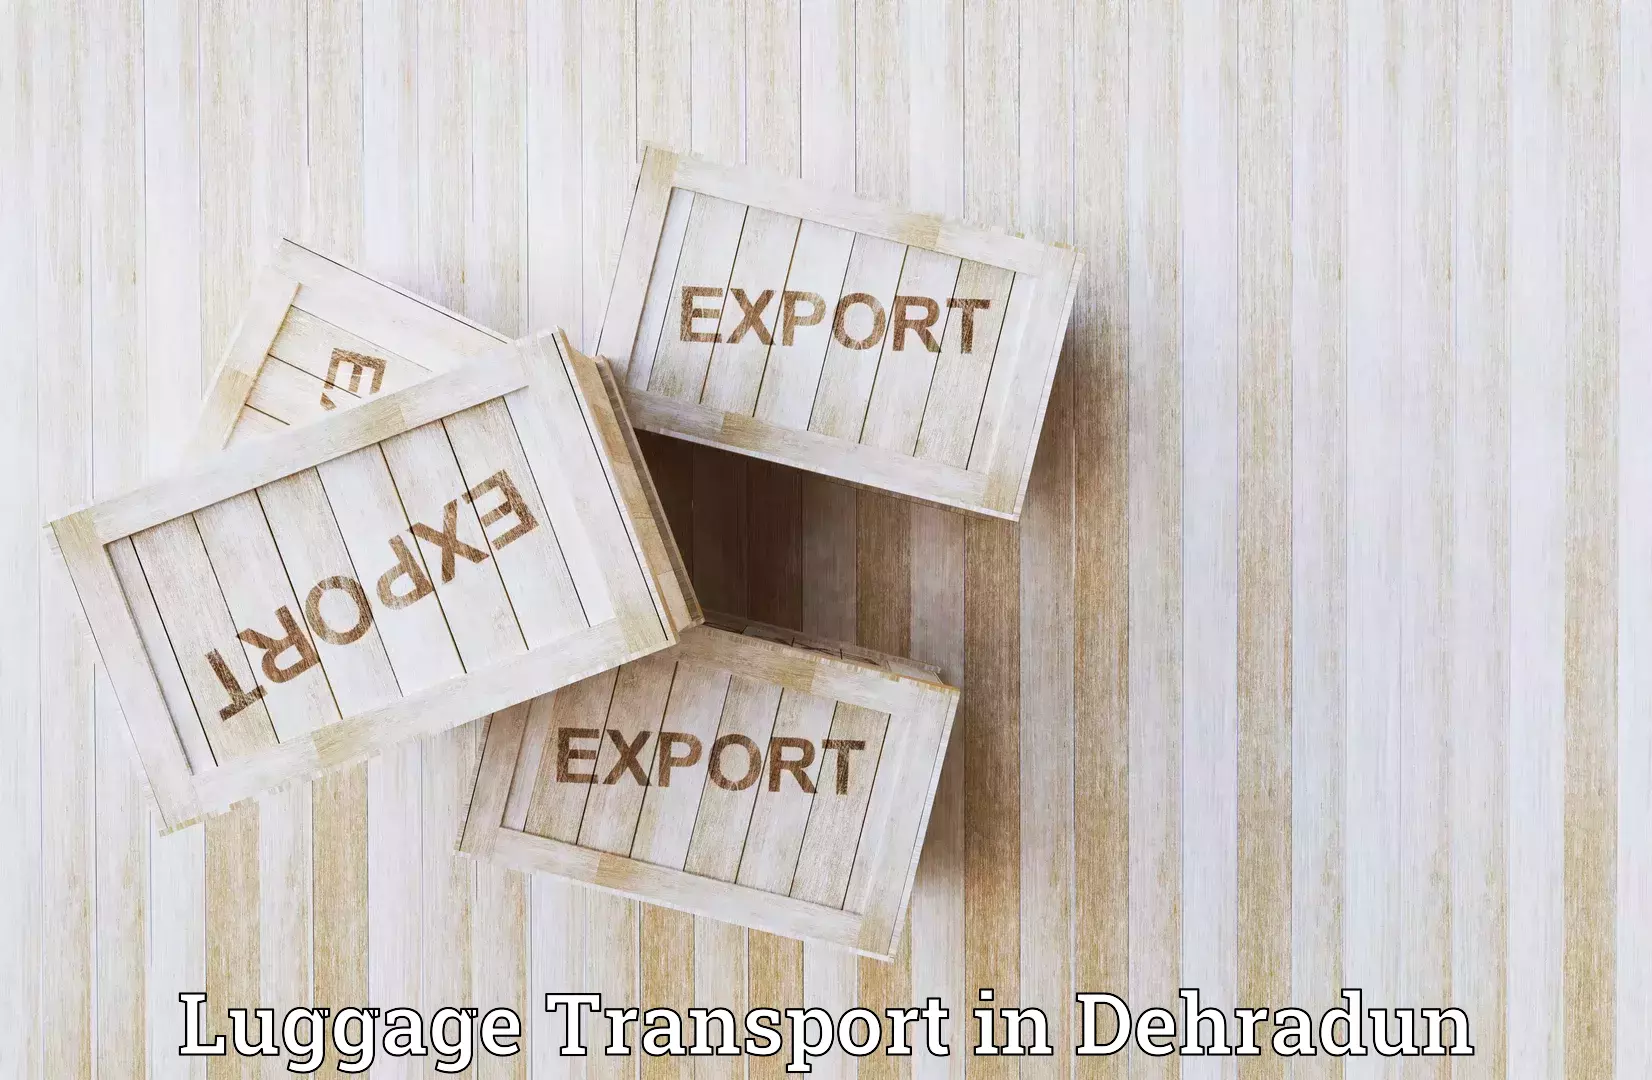 Luggage transport rates in Dehradun